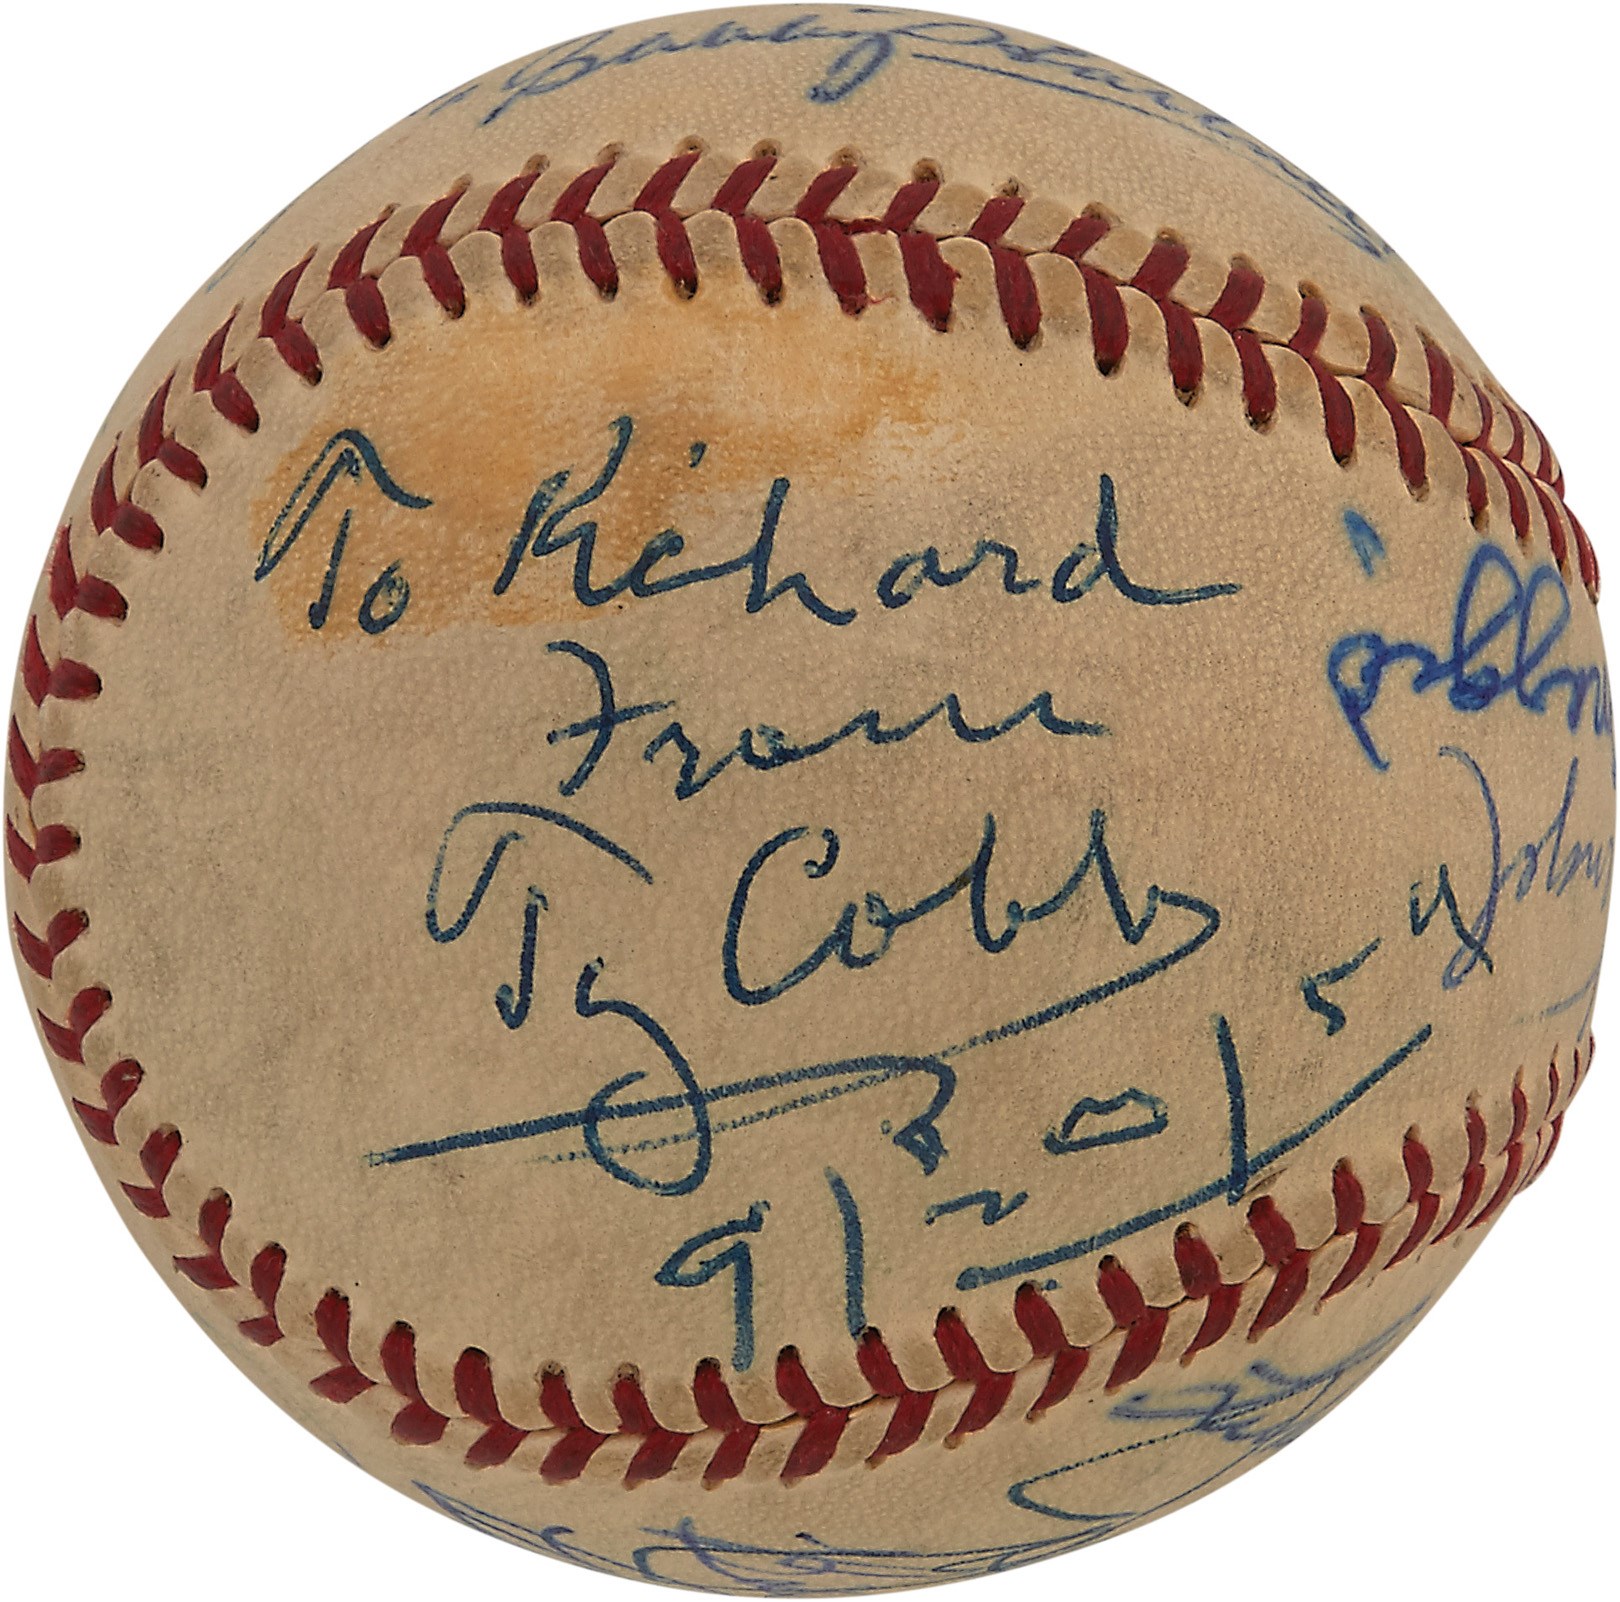 Baseball Autographs - Amazing 1959 Hall of Famers Signed Baseball w/Ty Cobb & Jackie Robinson (PSA)